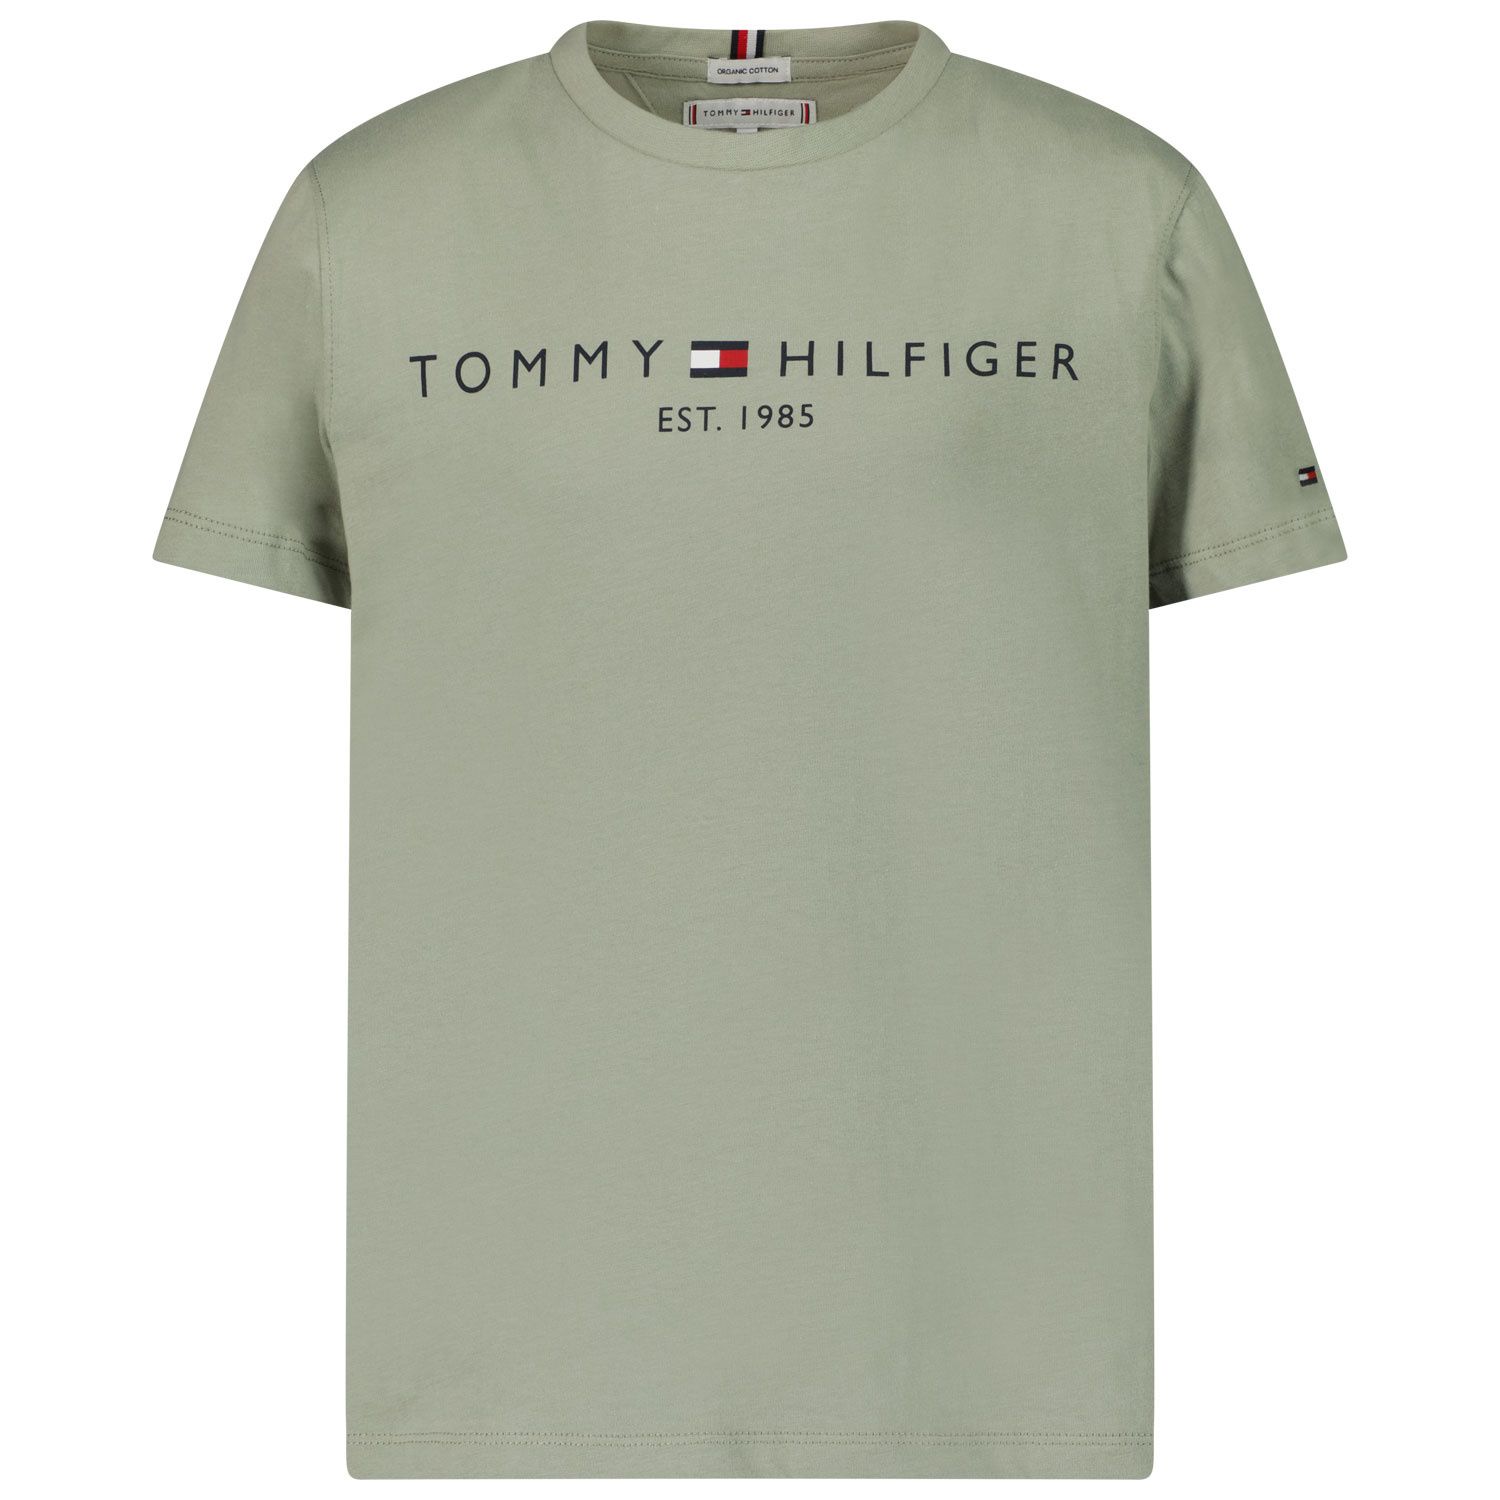 Afbeelding van Tommy Hilfiger KS0KS00201 kinder t-shirt olijf groen